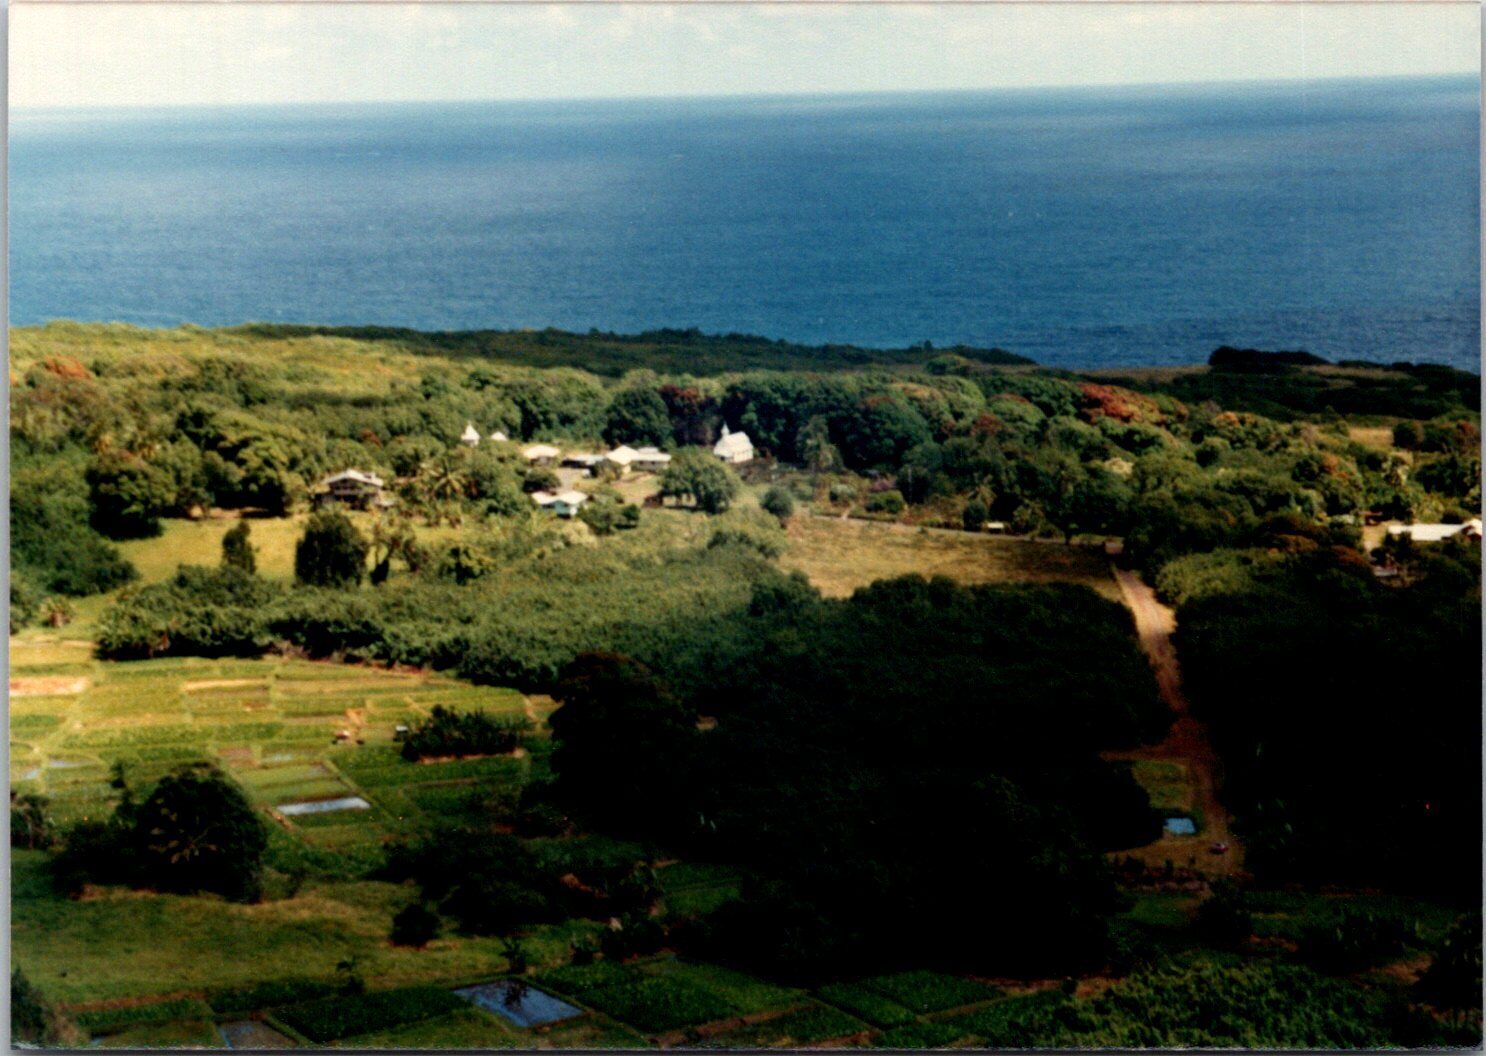 View of landscape & ocean coastline in Hawaii Found Photo V1363